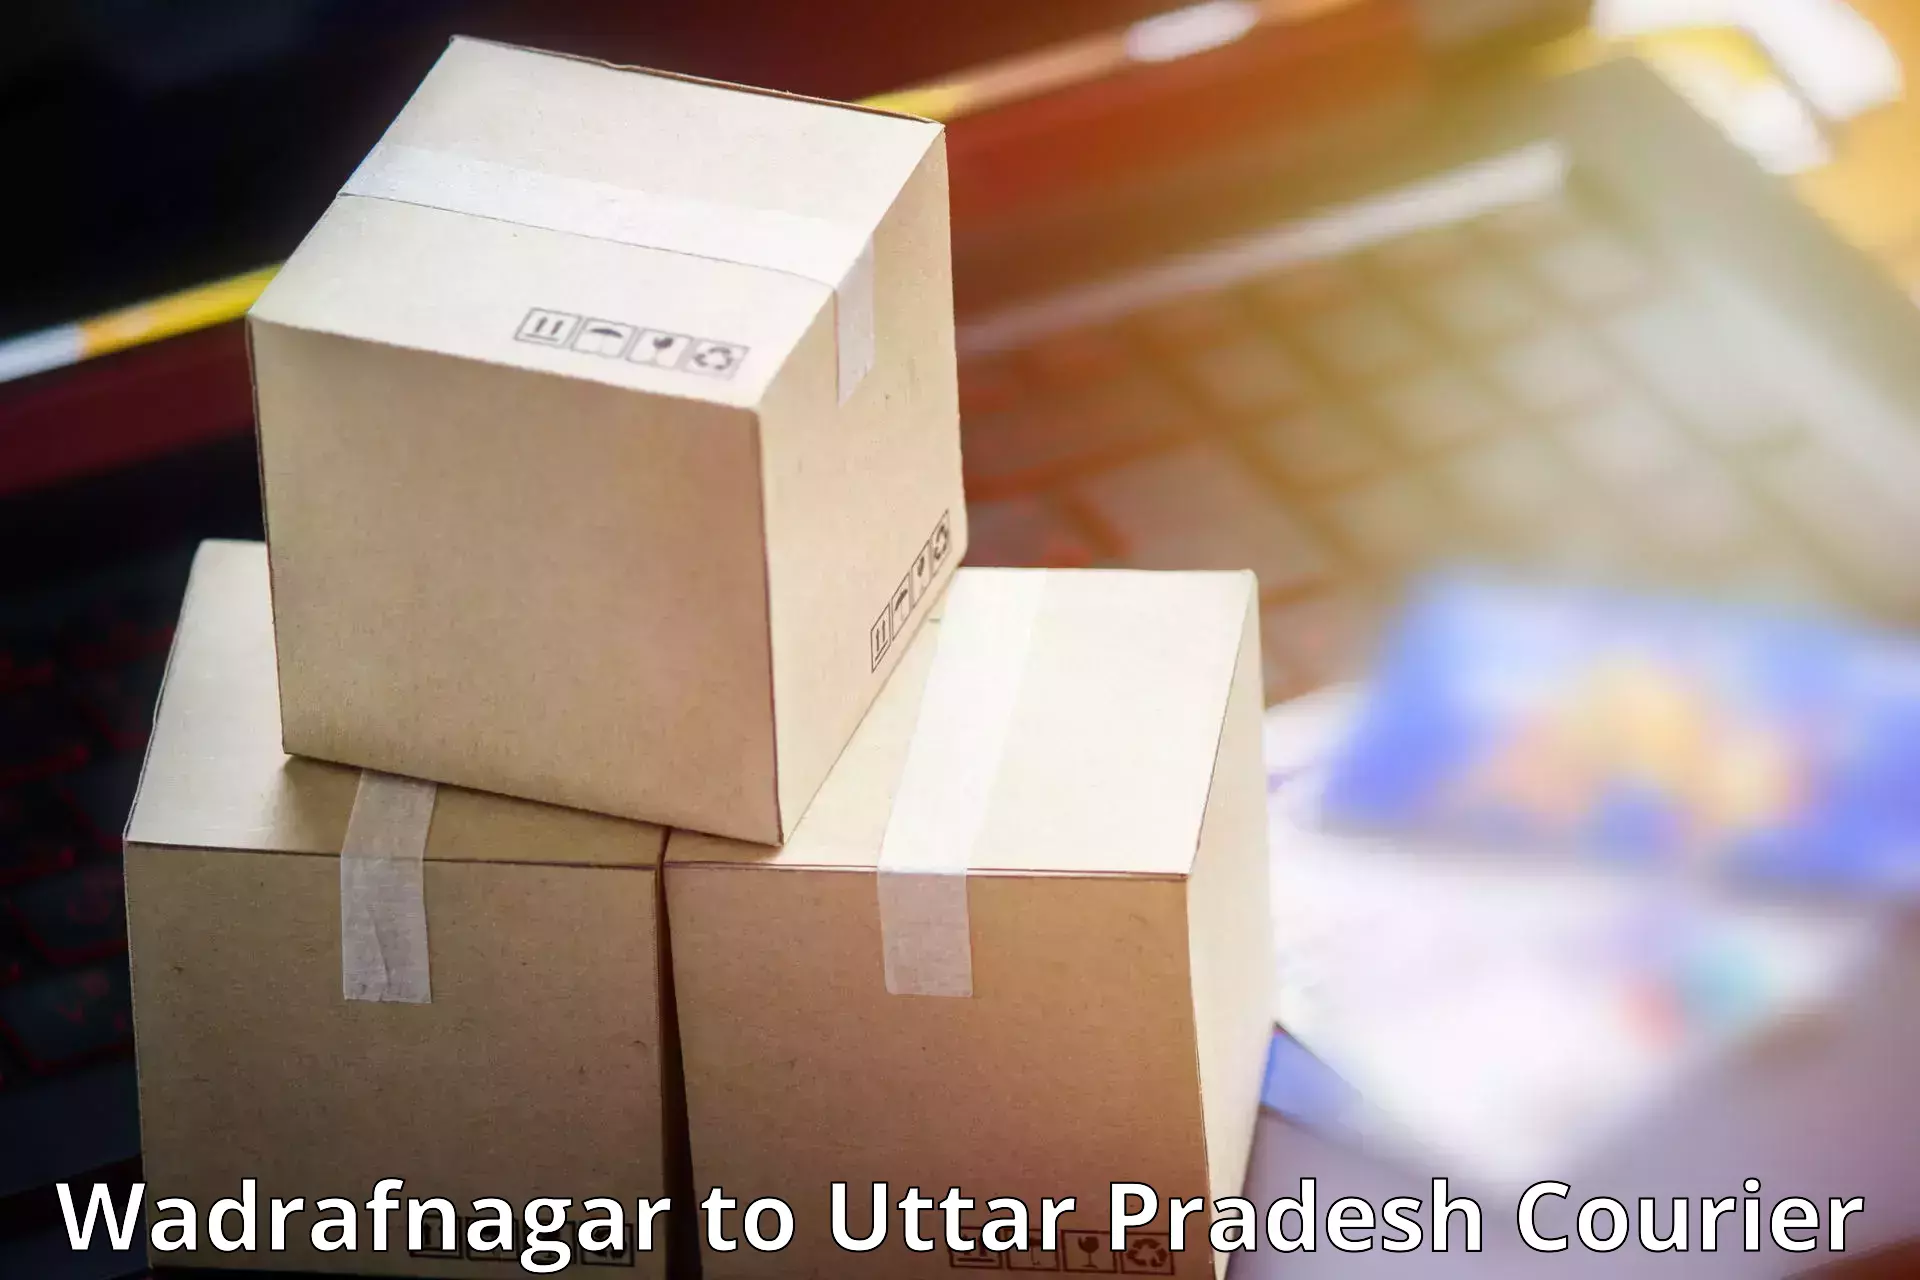 Global courier networks Wadrafnagar to Unnao